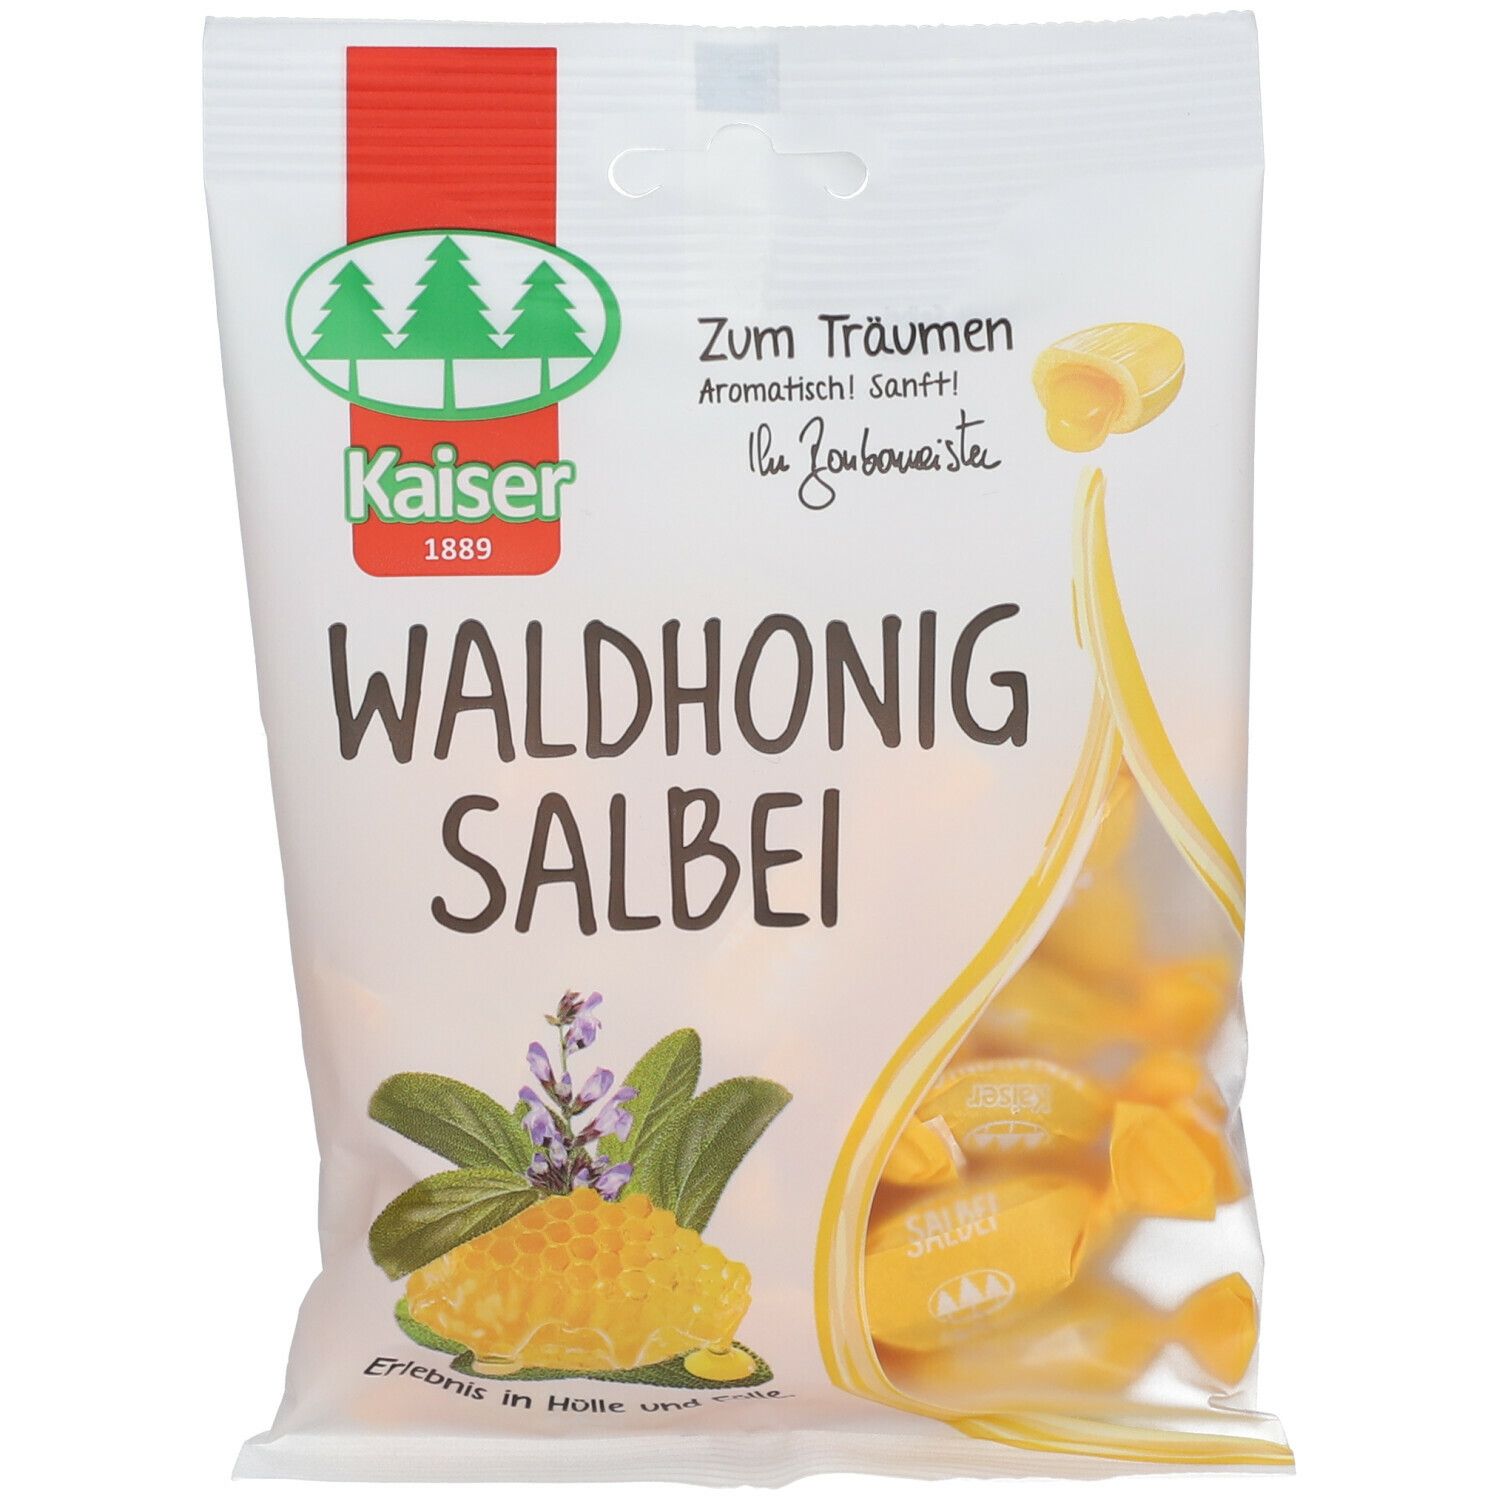 Image of Kaiser Waldhonig-Salbei Bonbons